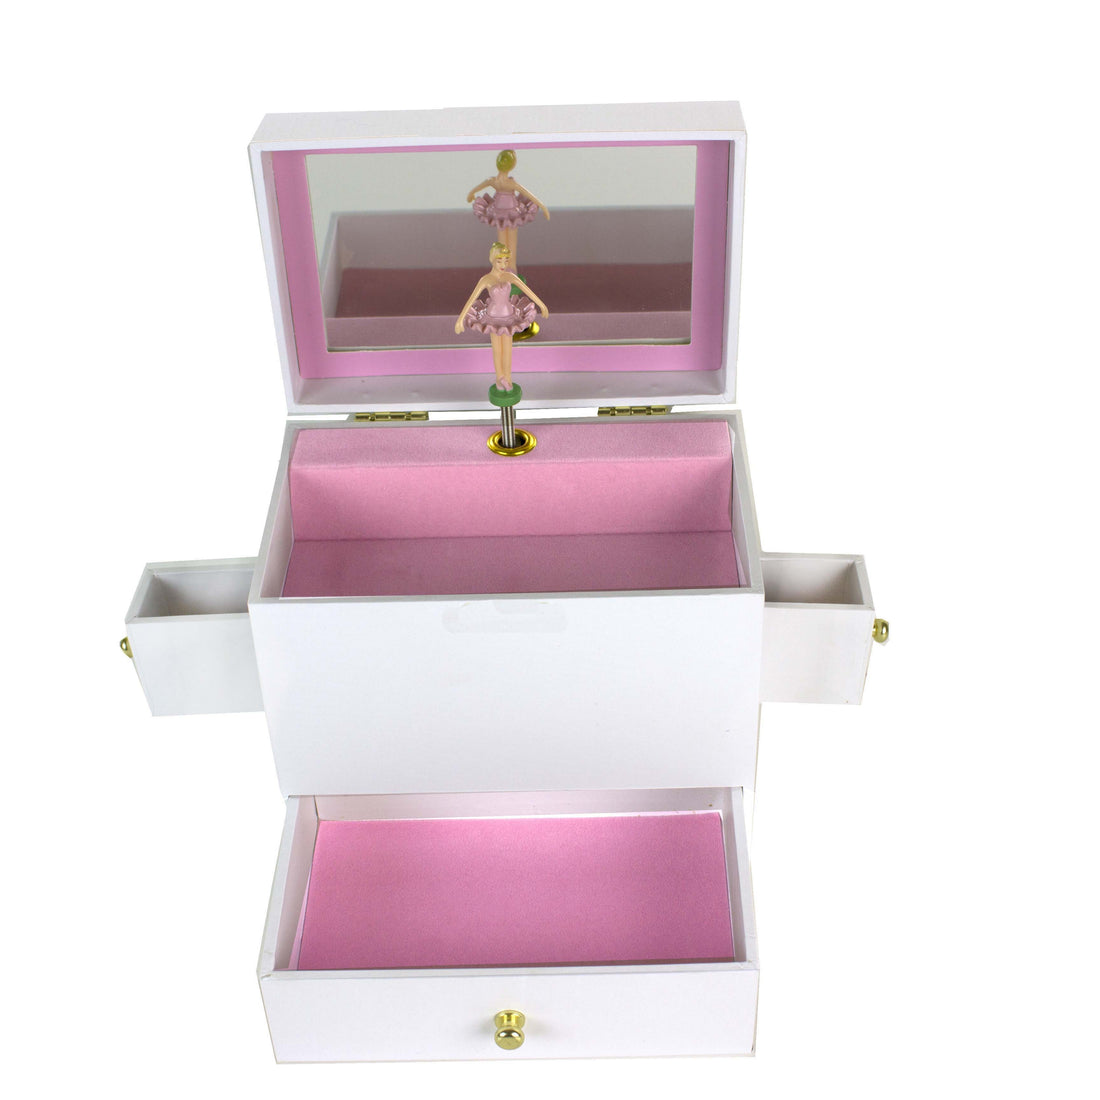 Kitty Cat Deluxe Musical Ballerina Jewelry Box